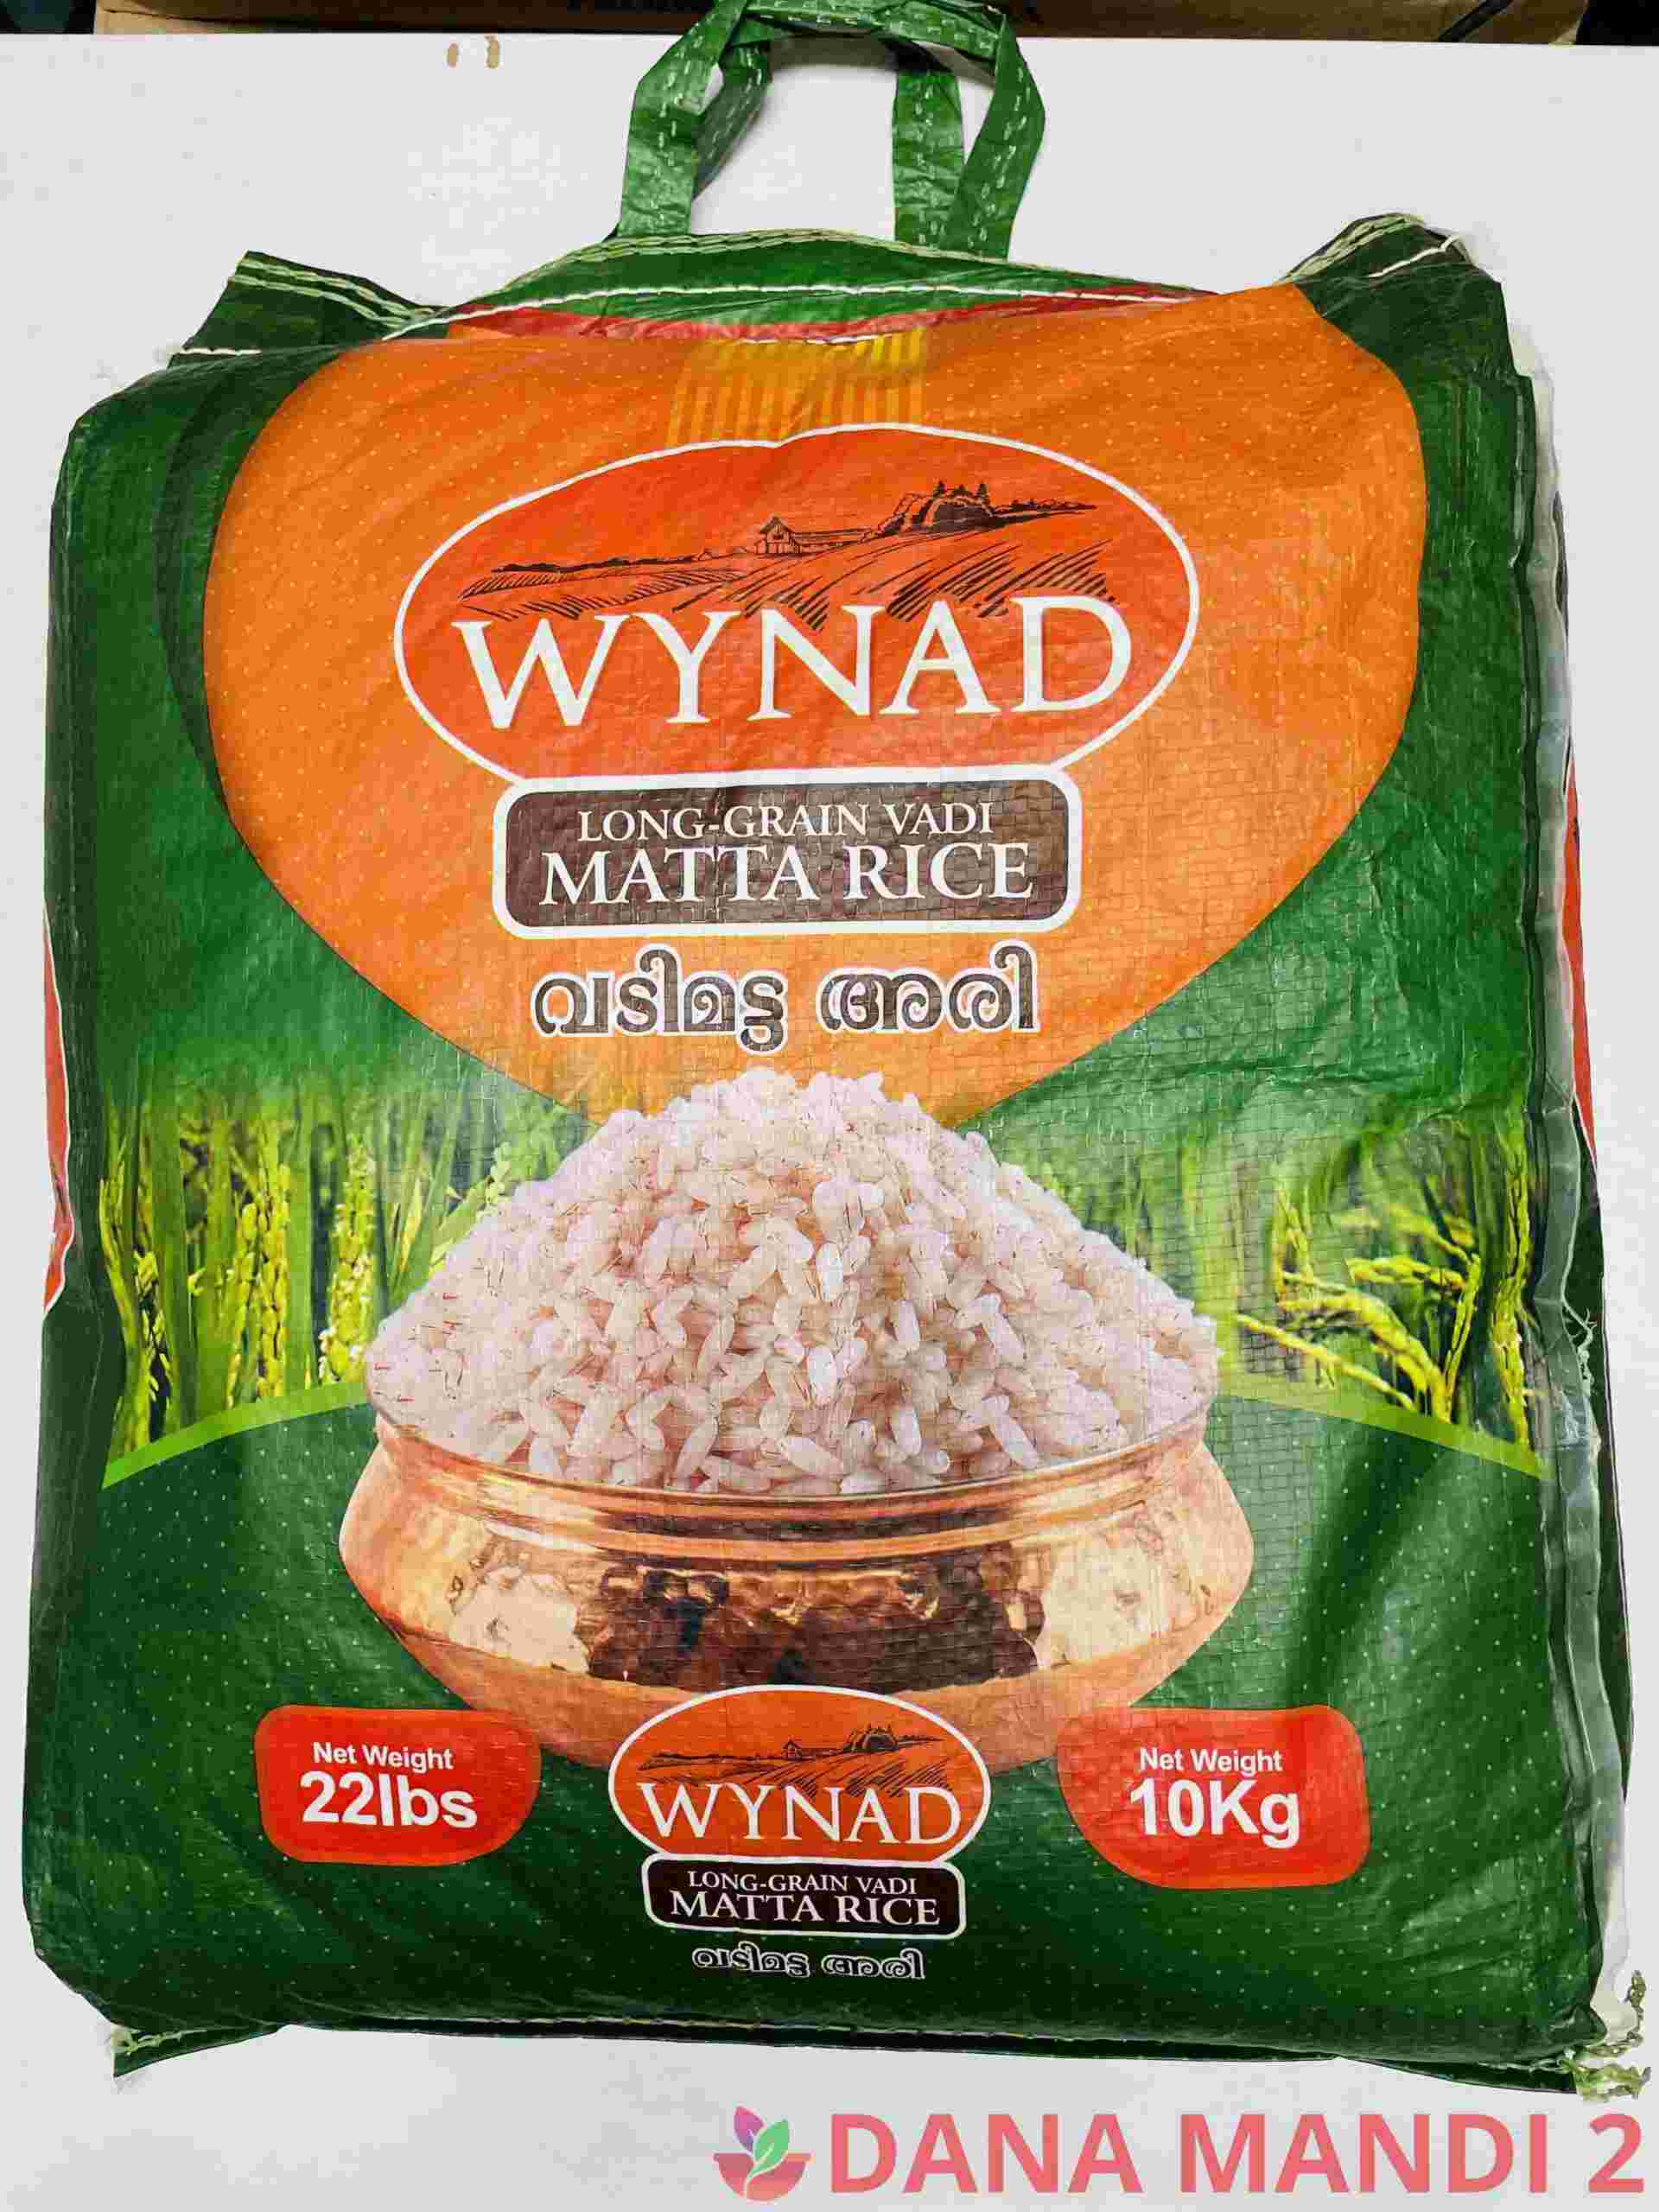 Wynad Long Grain Vadi Matta Rice